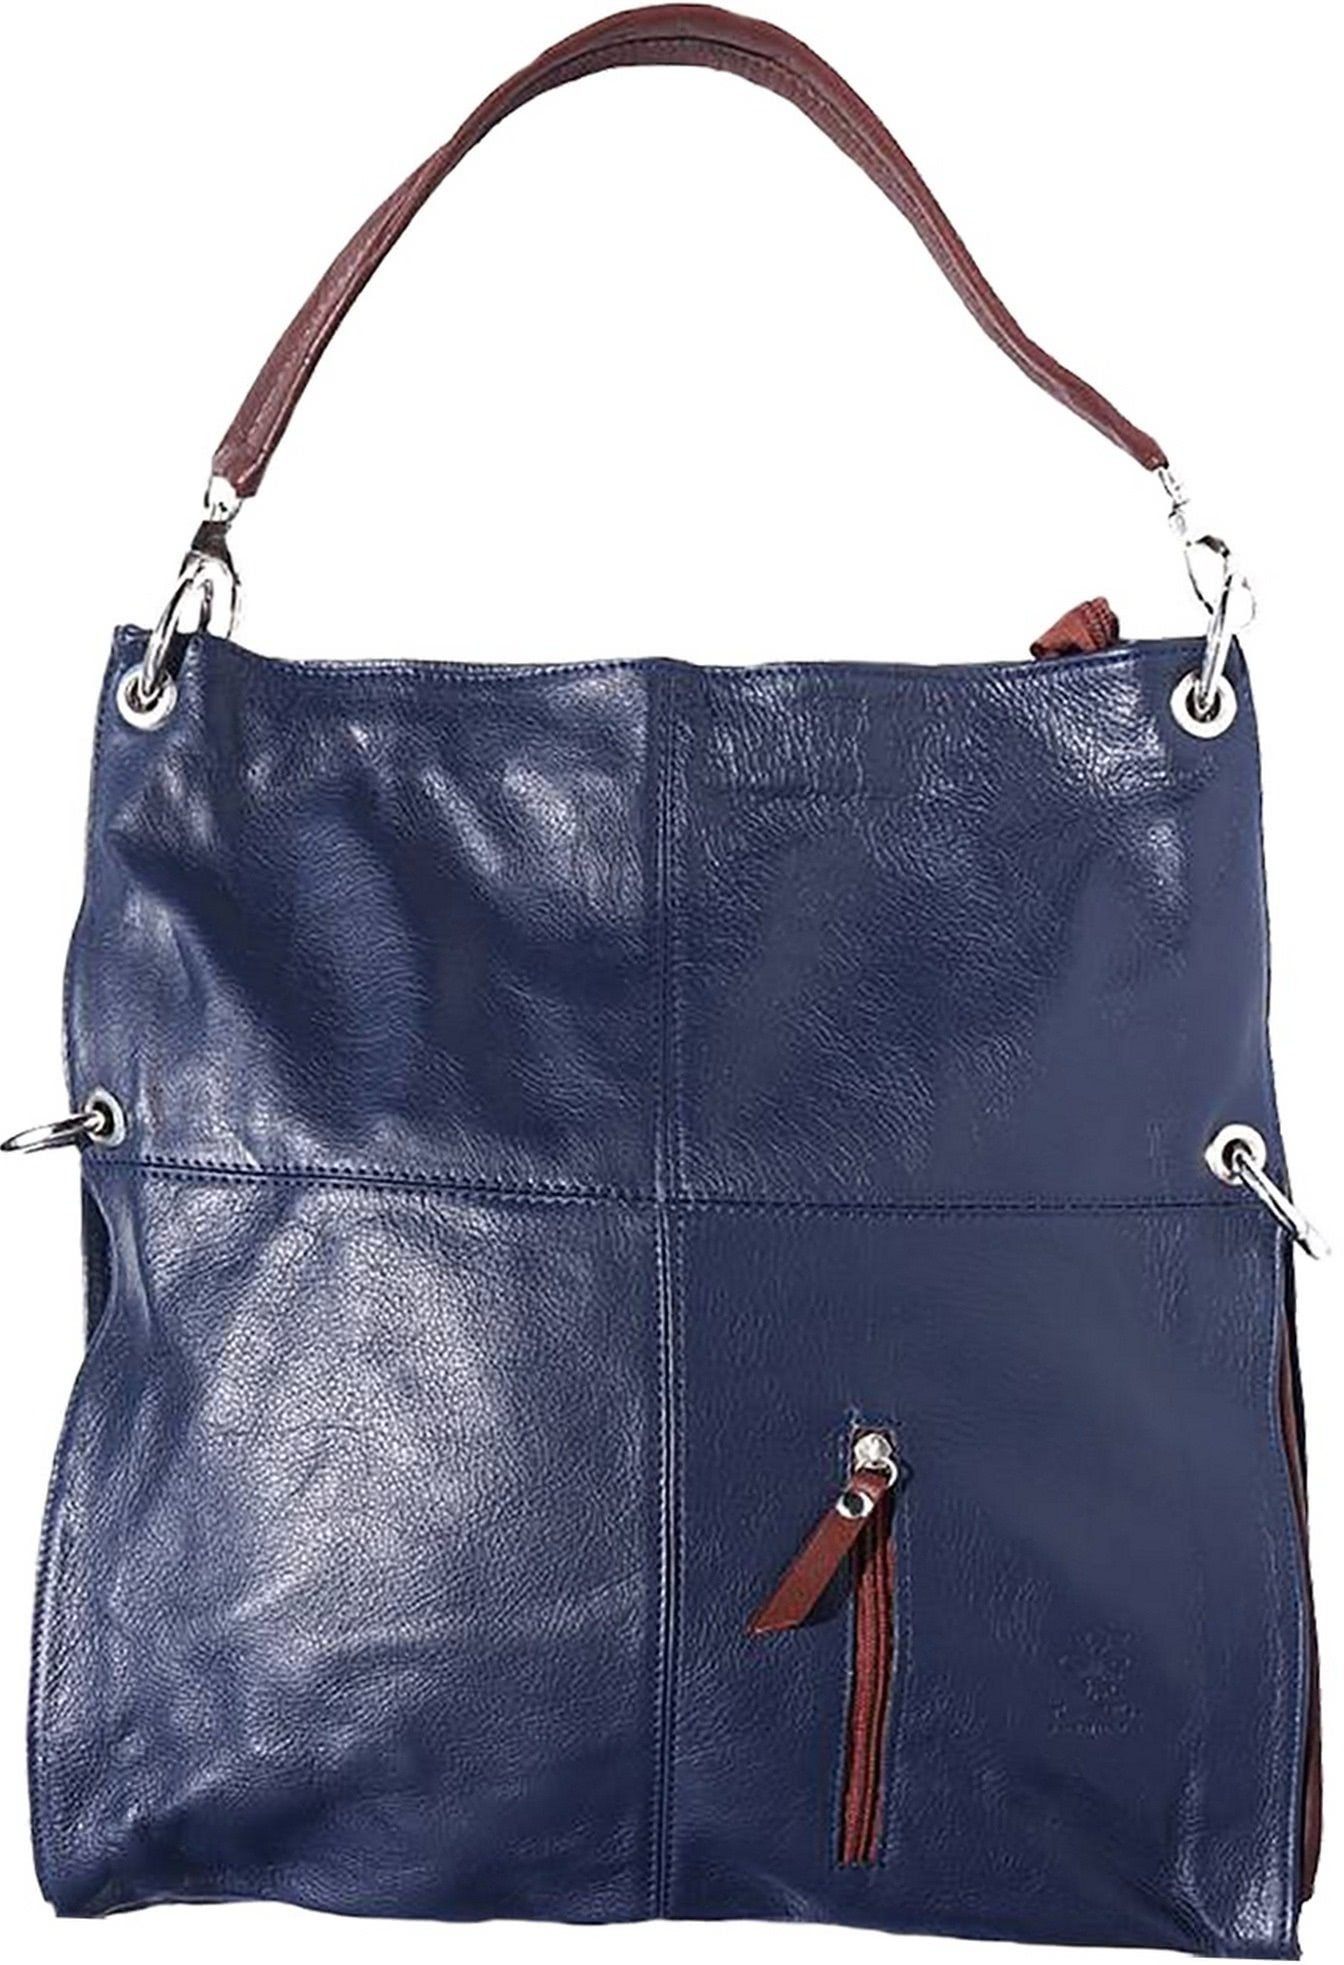 FLORENCE Schultertasche Florence Hobo Bag Echtleder Handtasche (Beuteltasche, Beuteltasche), Damen Tasche Echtleder blau, braun, Made-In Italy